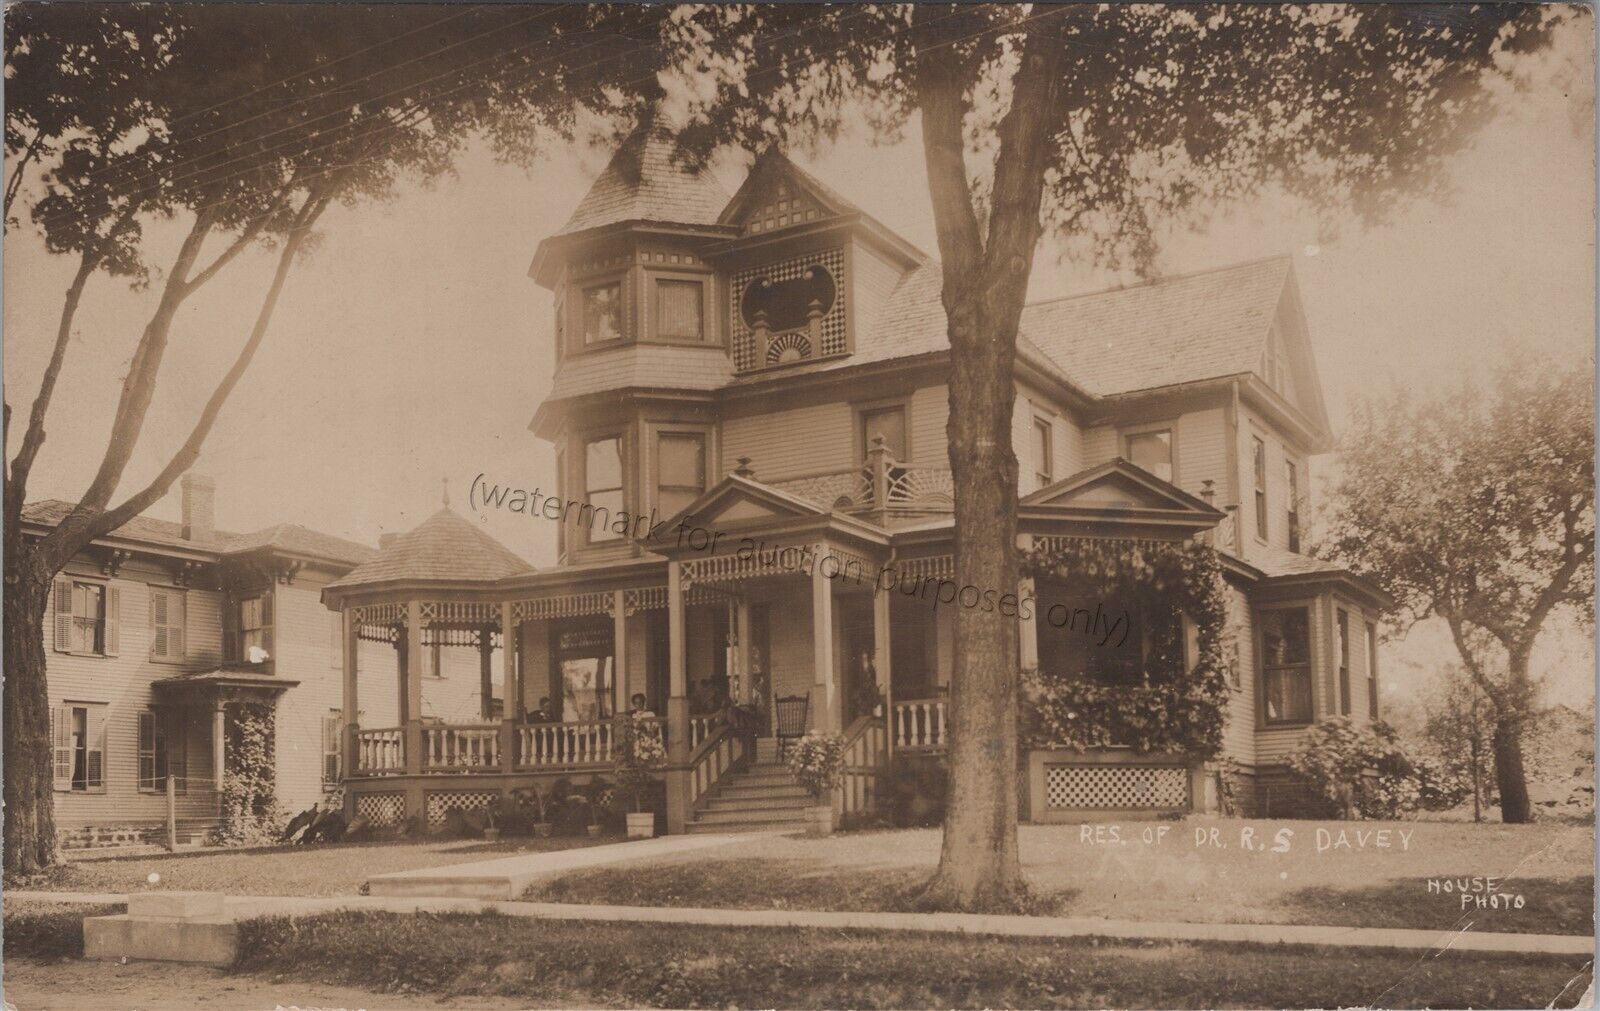 Parish, NY: RPPC 1908 Residence Of RS Davey, New York House Photo Postcard